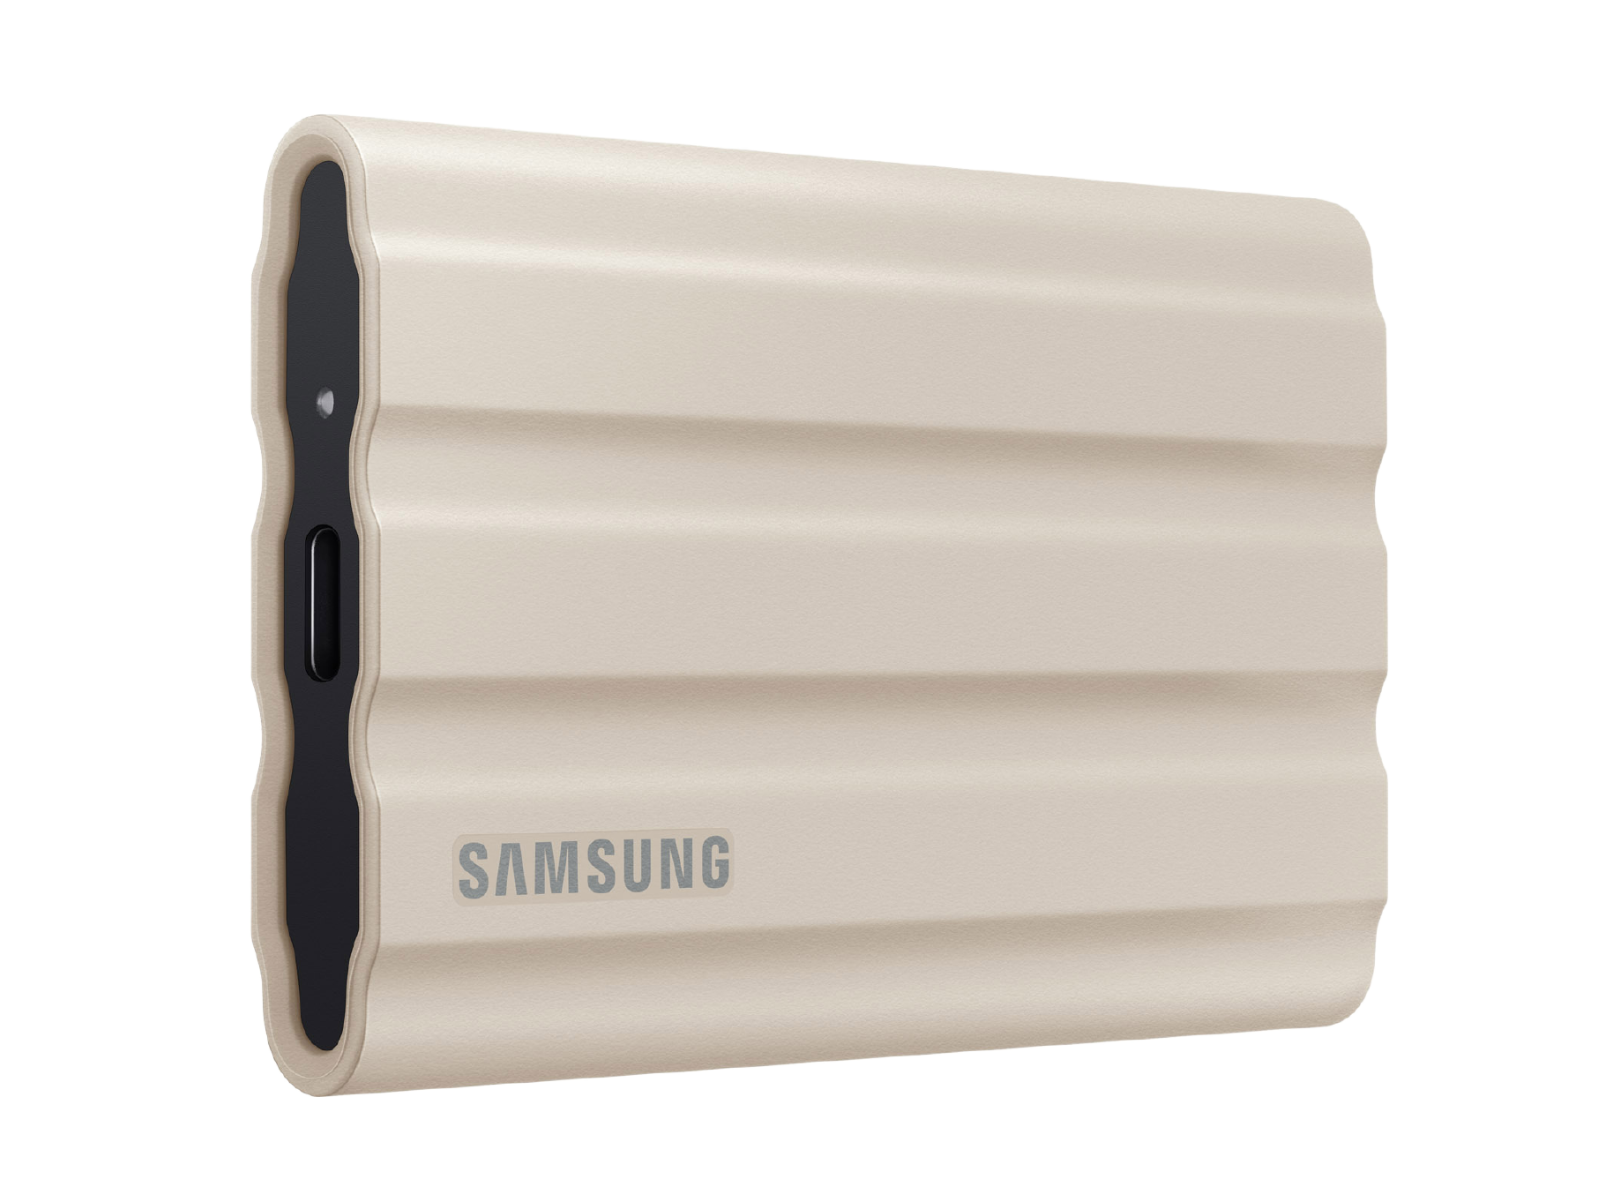 Portable SSD T7 Shield USB 3.2 2TB (Beige) Memory & Storage - MU